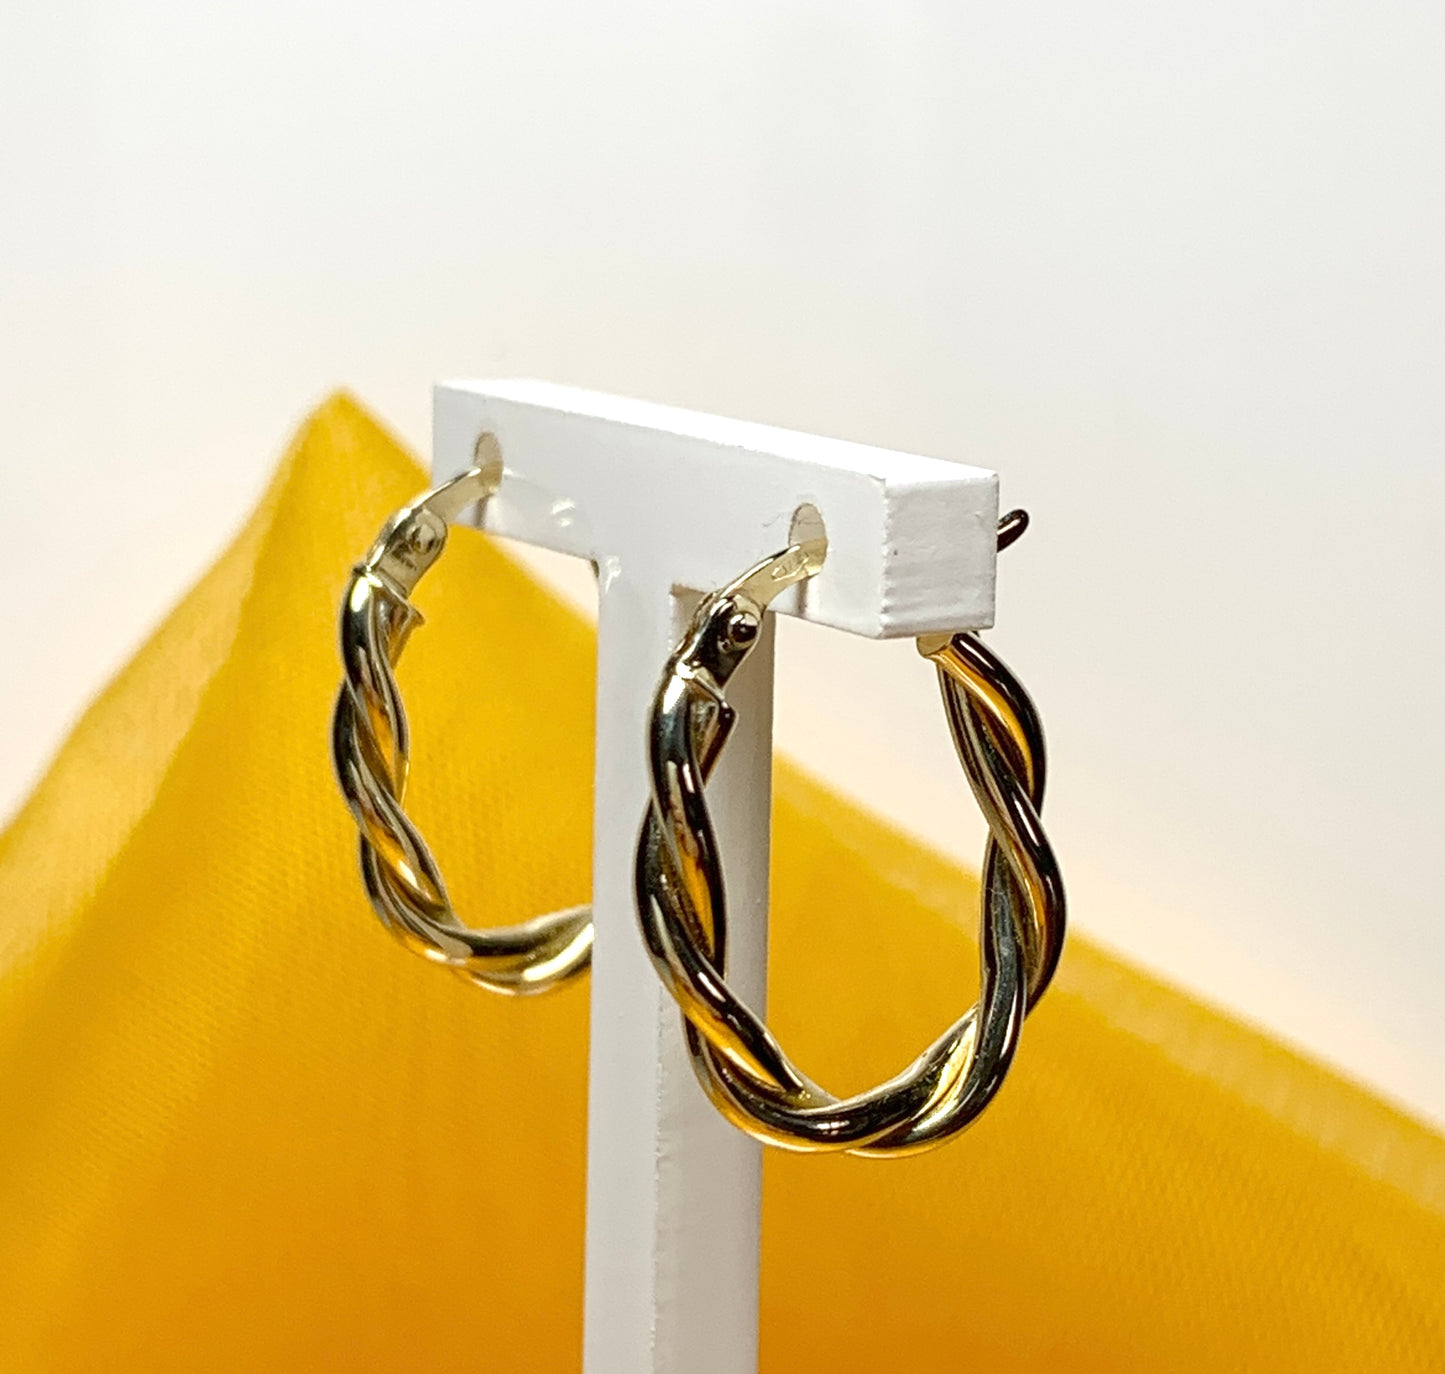 Oval hoop earrings yellow gold twisted